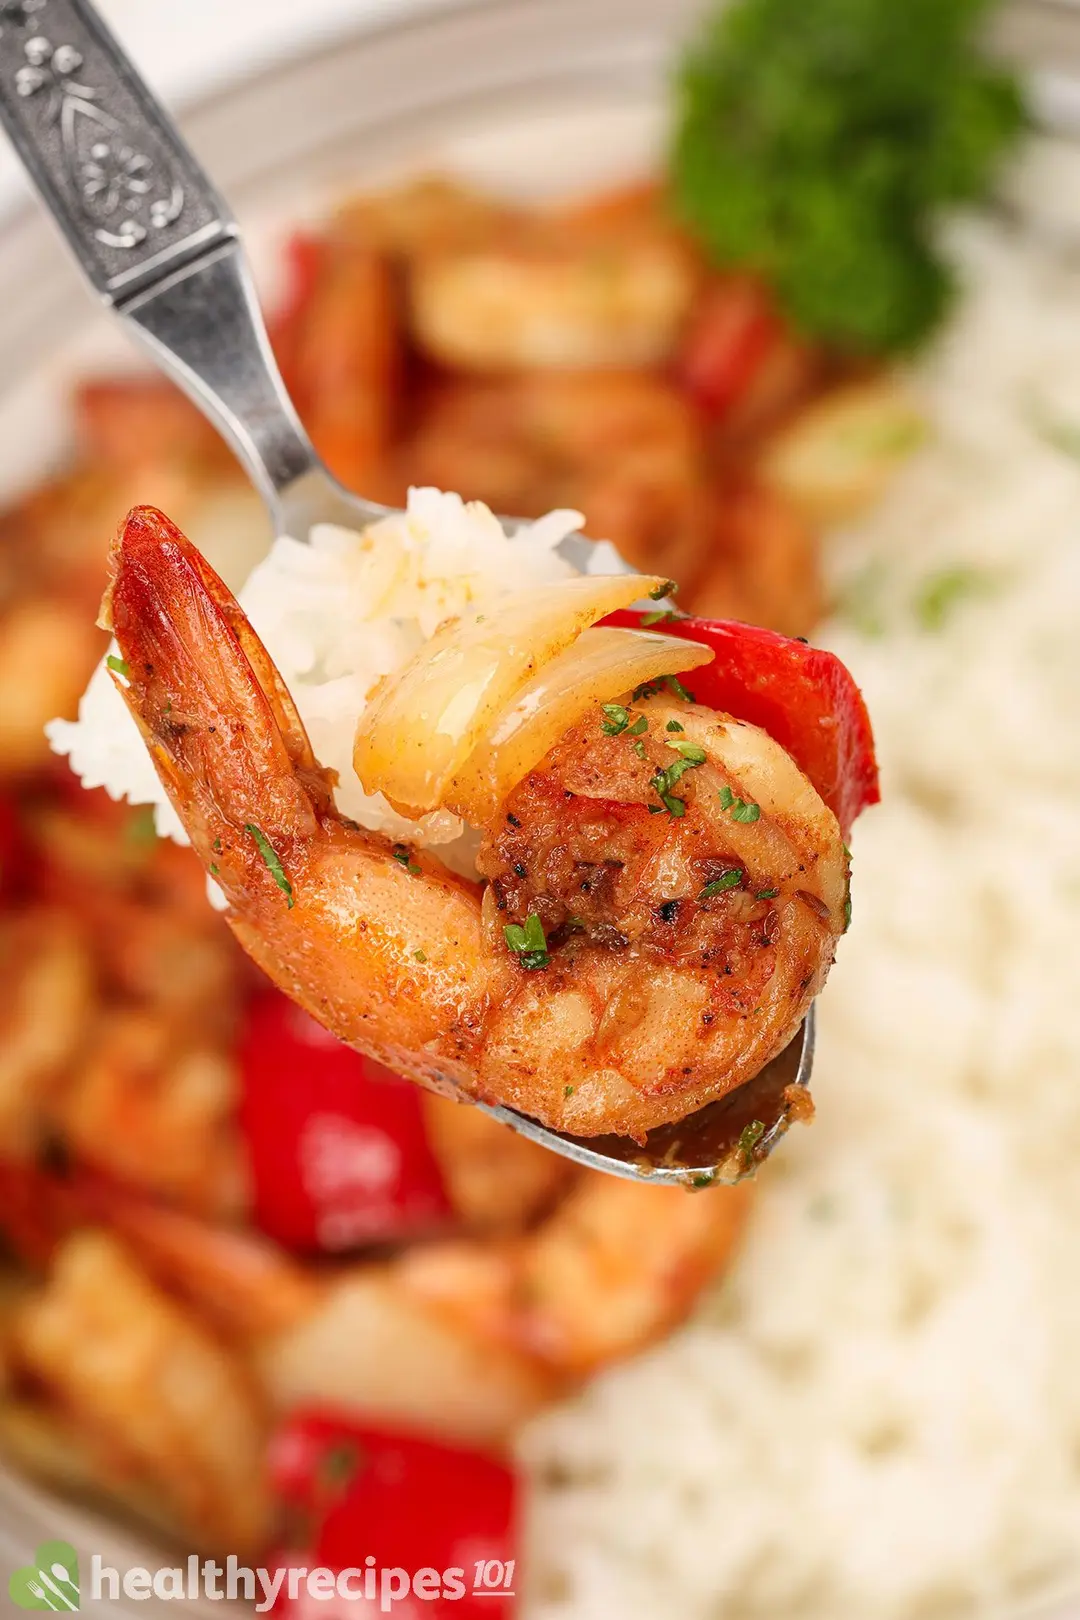 What to Serve With Cajun Shrimp